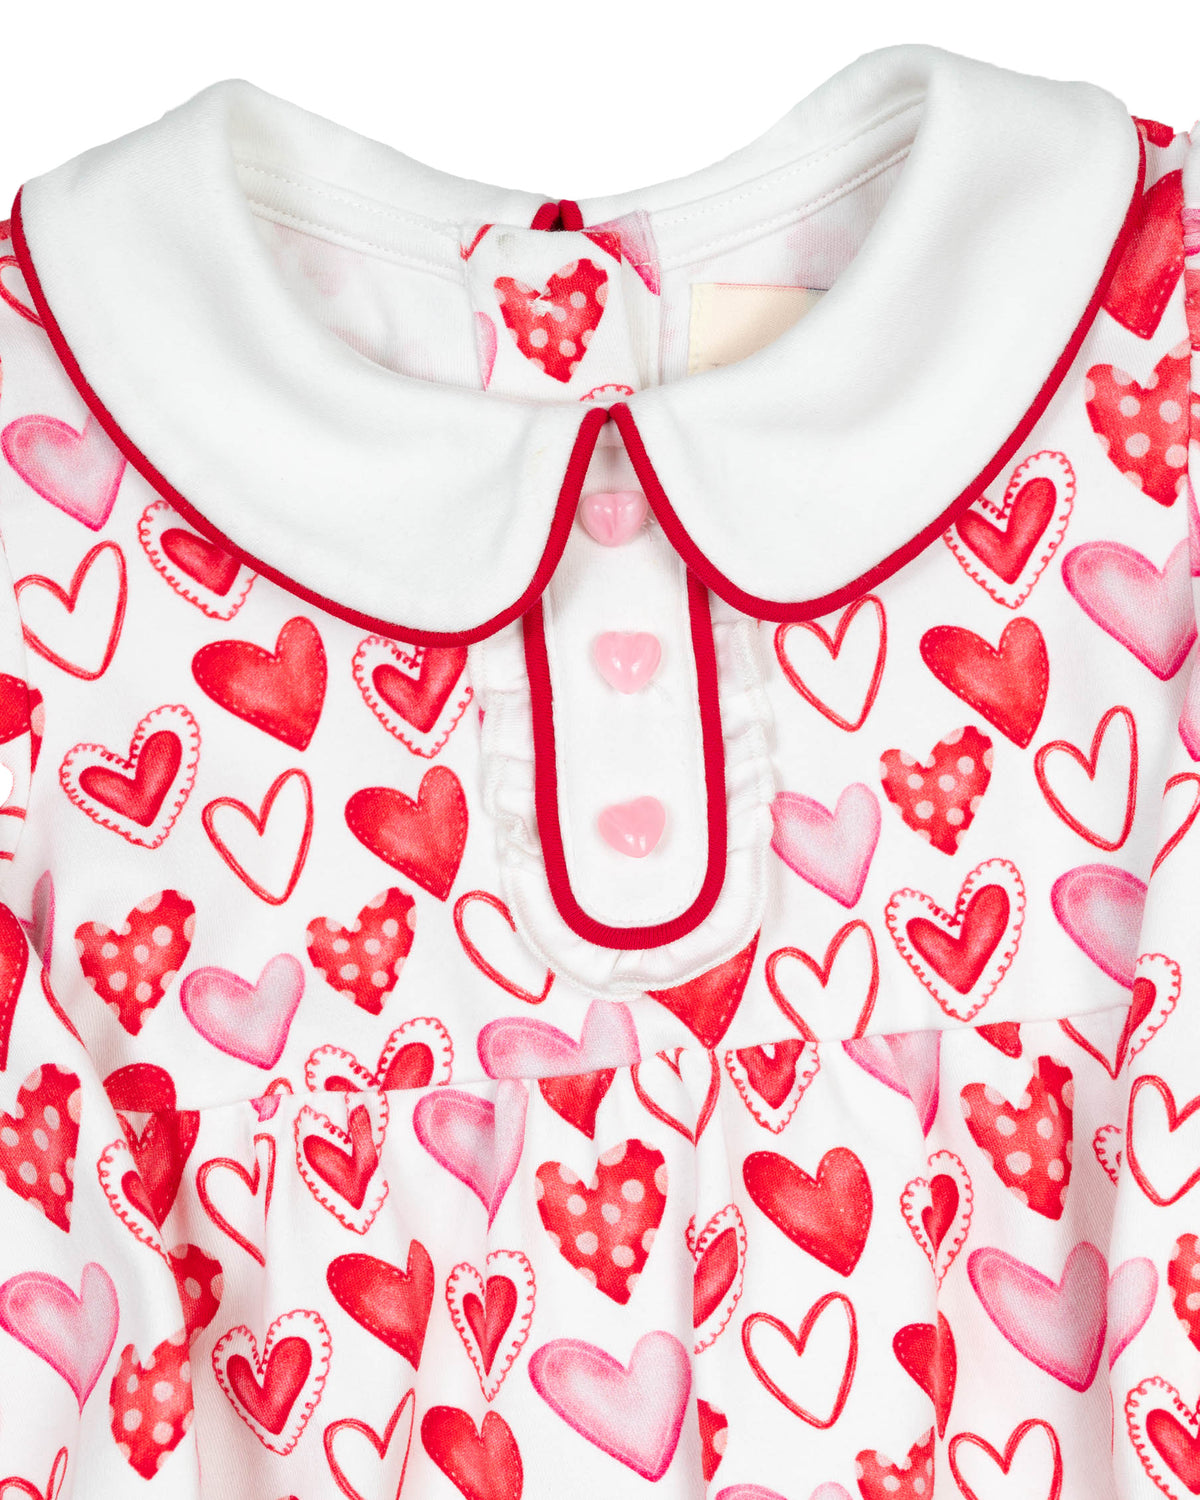 Whimsical Hearts Knit Dress- FINAL SALE